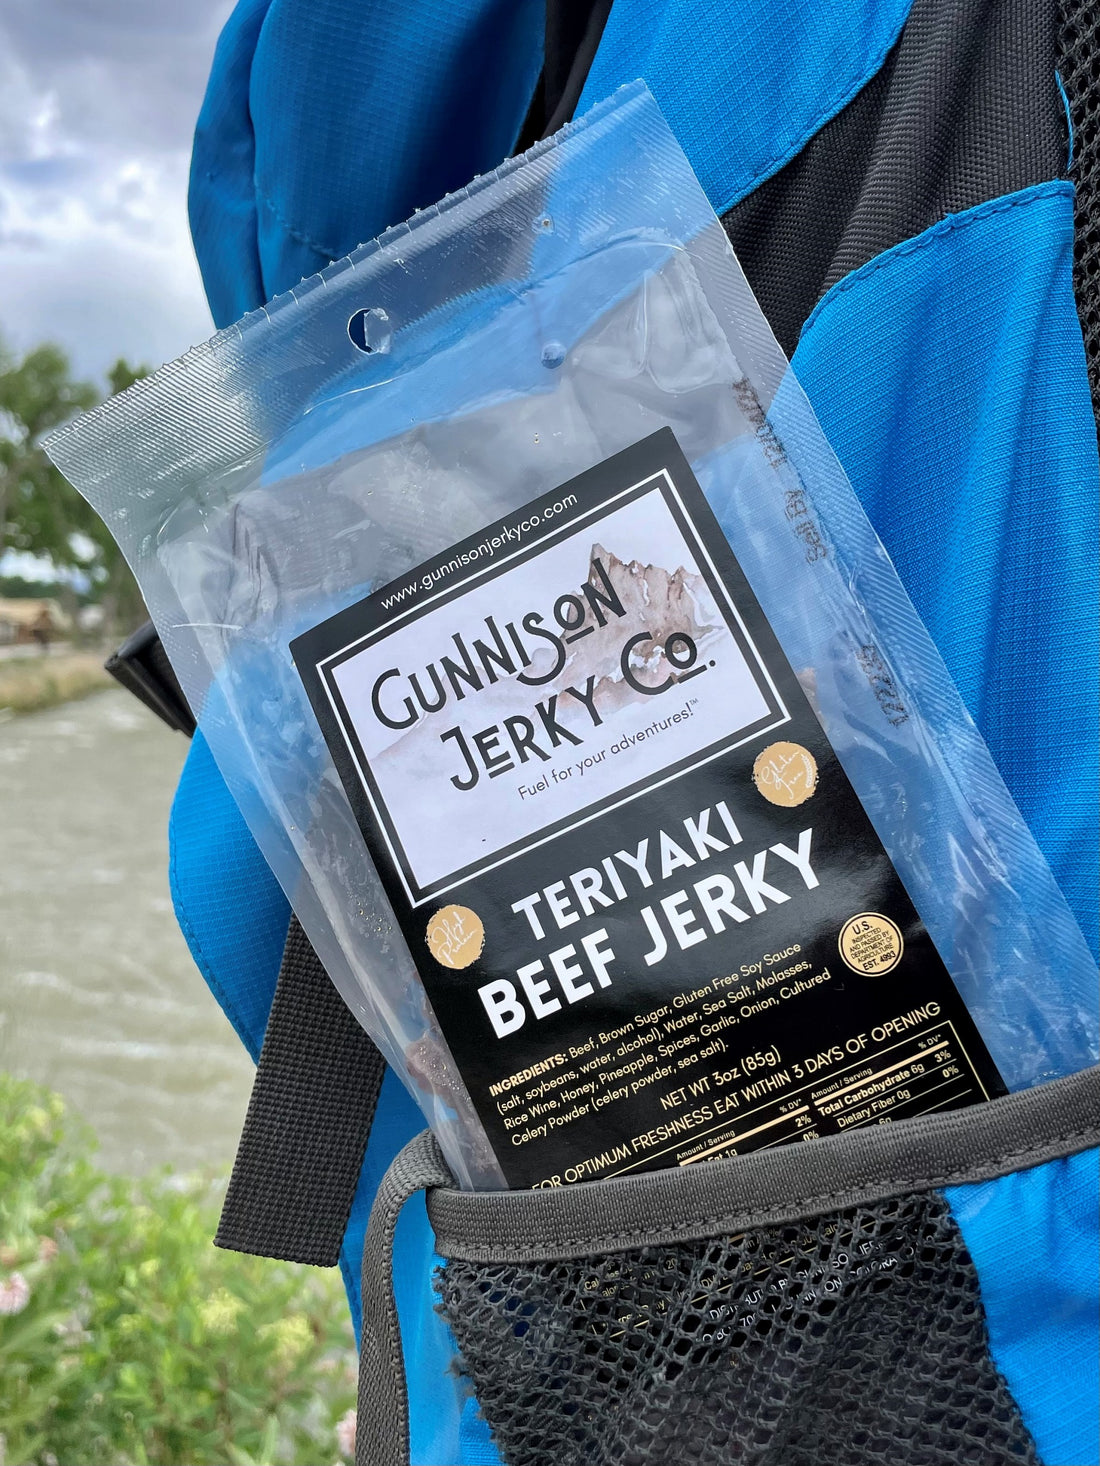 Gunnison Jerky Co., Teriyaki Beef Jerky in Backpack